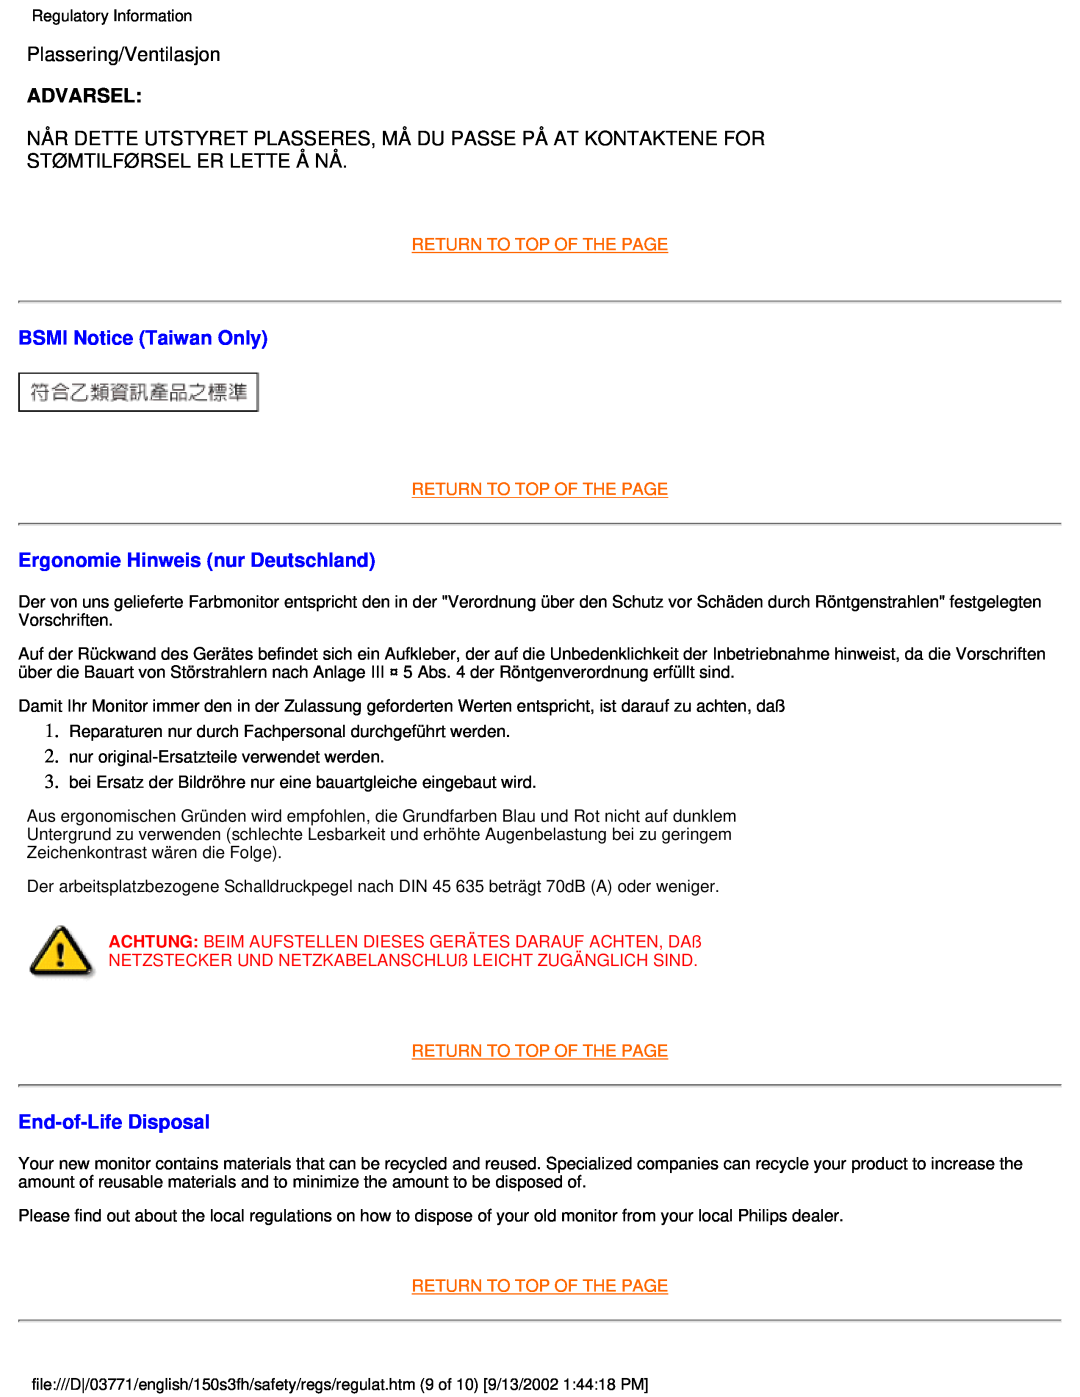 Philips 150S3H user manual Advarsel, BSMI Notice Taiwan Only, Ergonomie Hinweis nur Deutschland, End-of-Life Disposal 